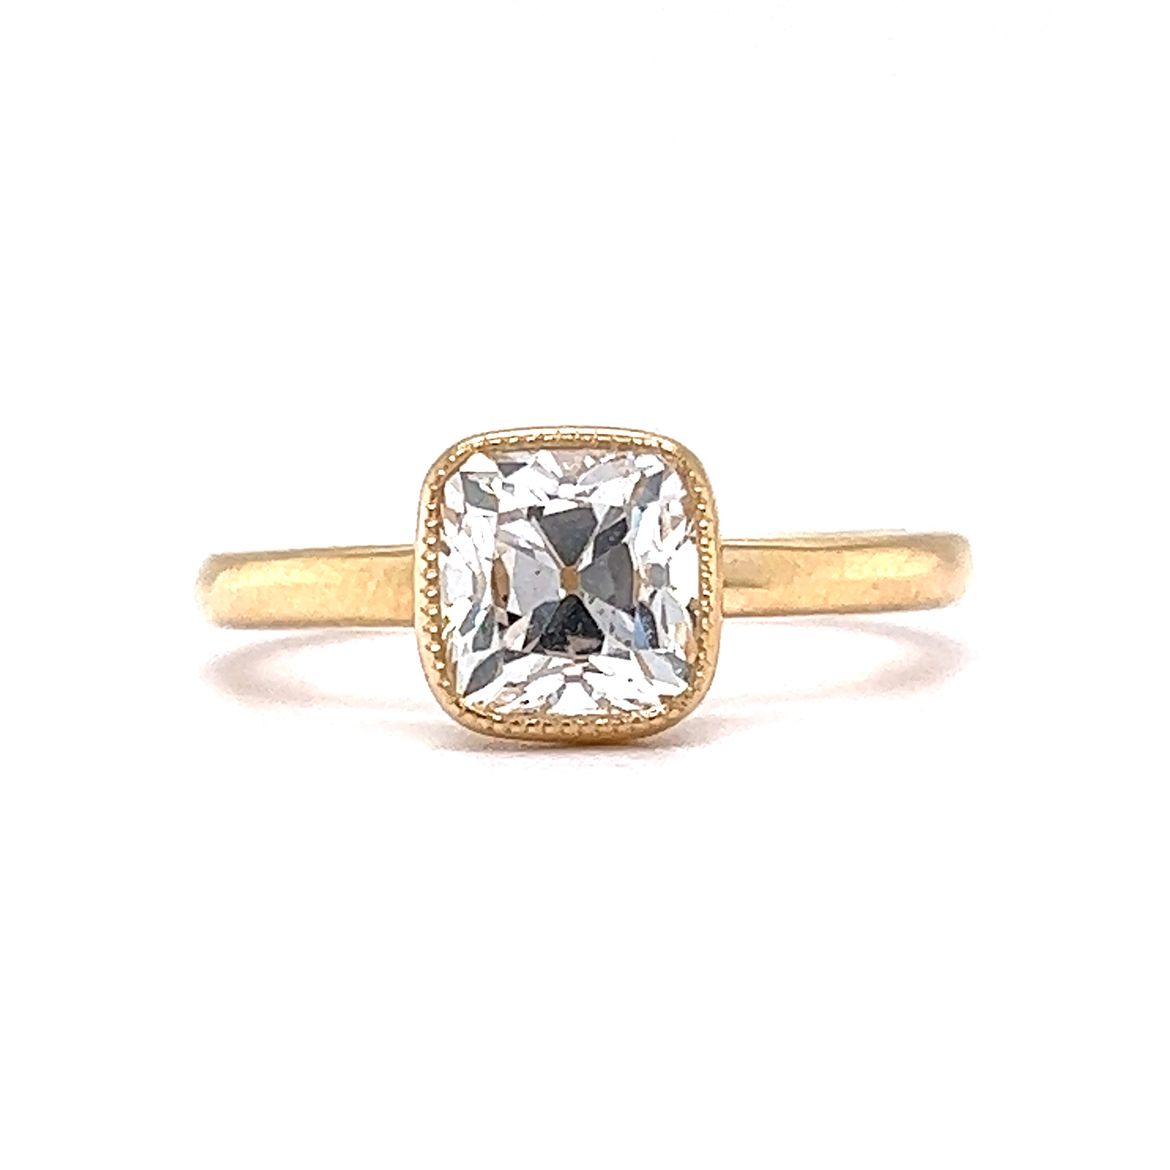 1.44 Cushion Cut Diamond Engagement Ring in 14k Yellow Gold